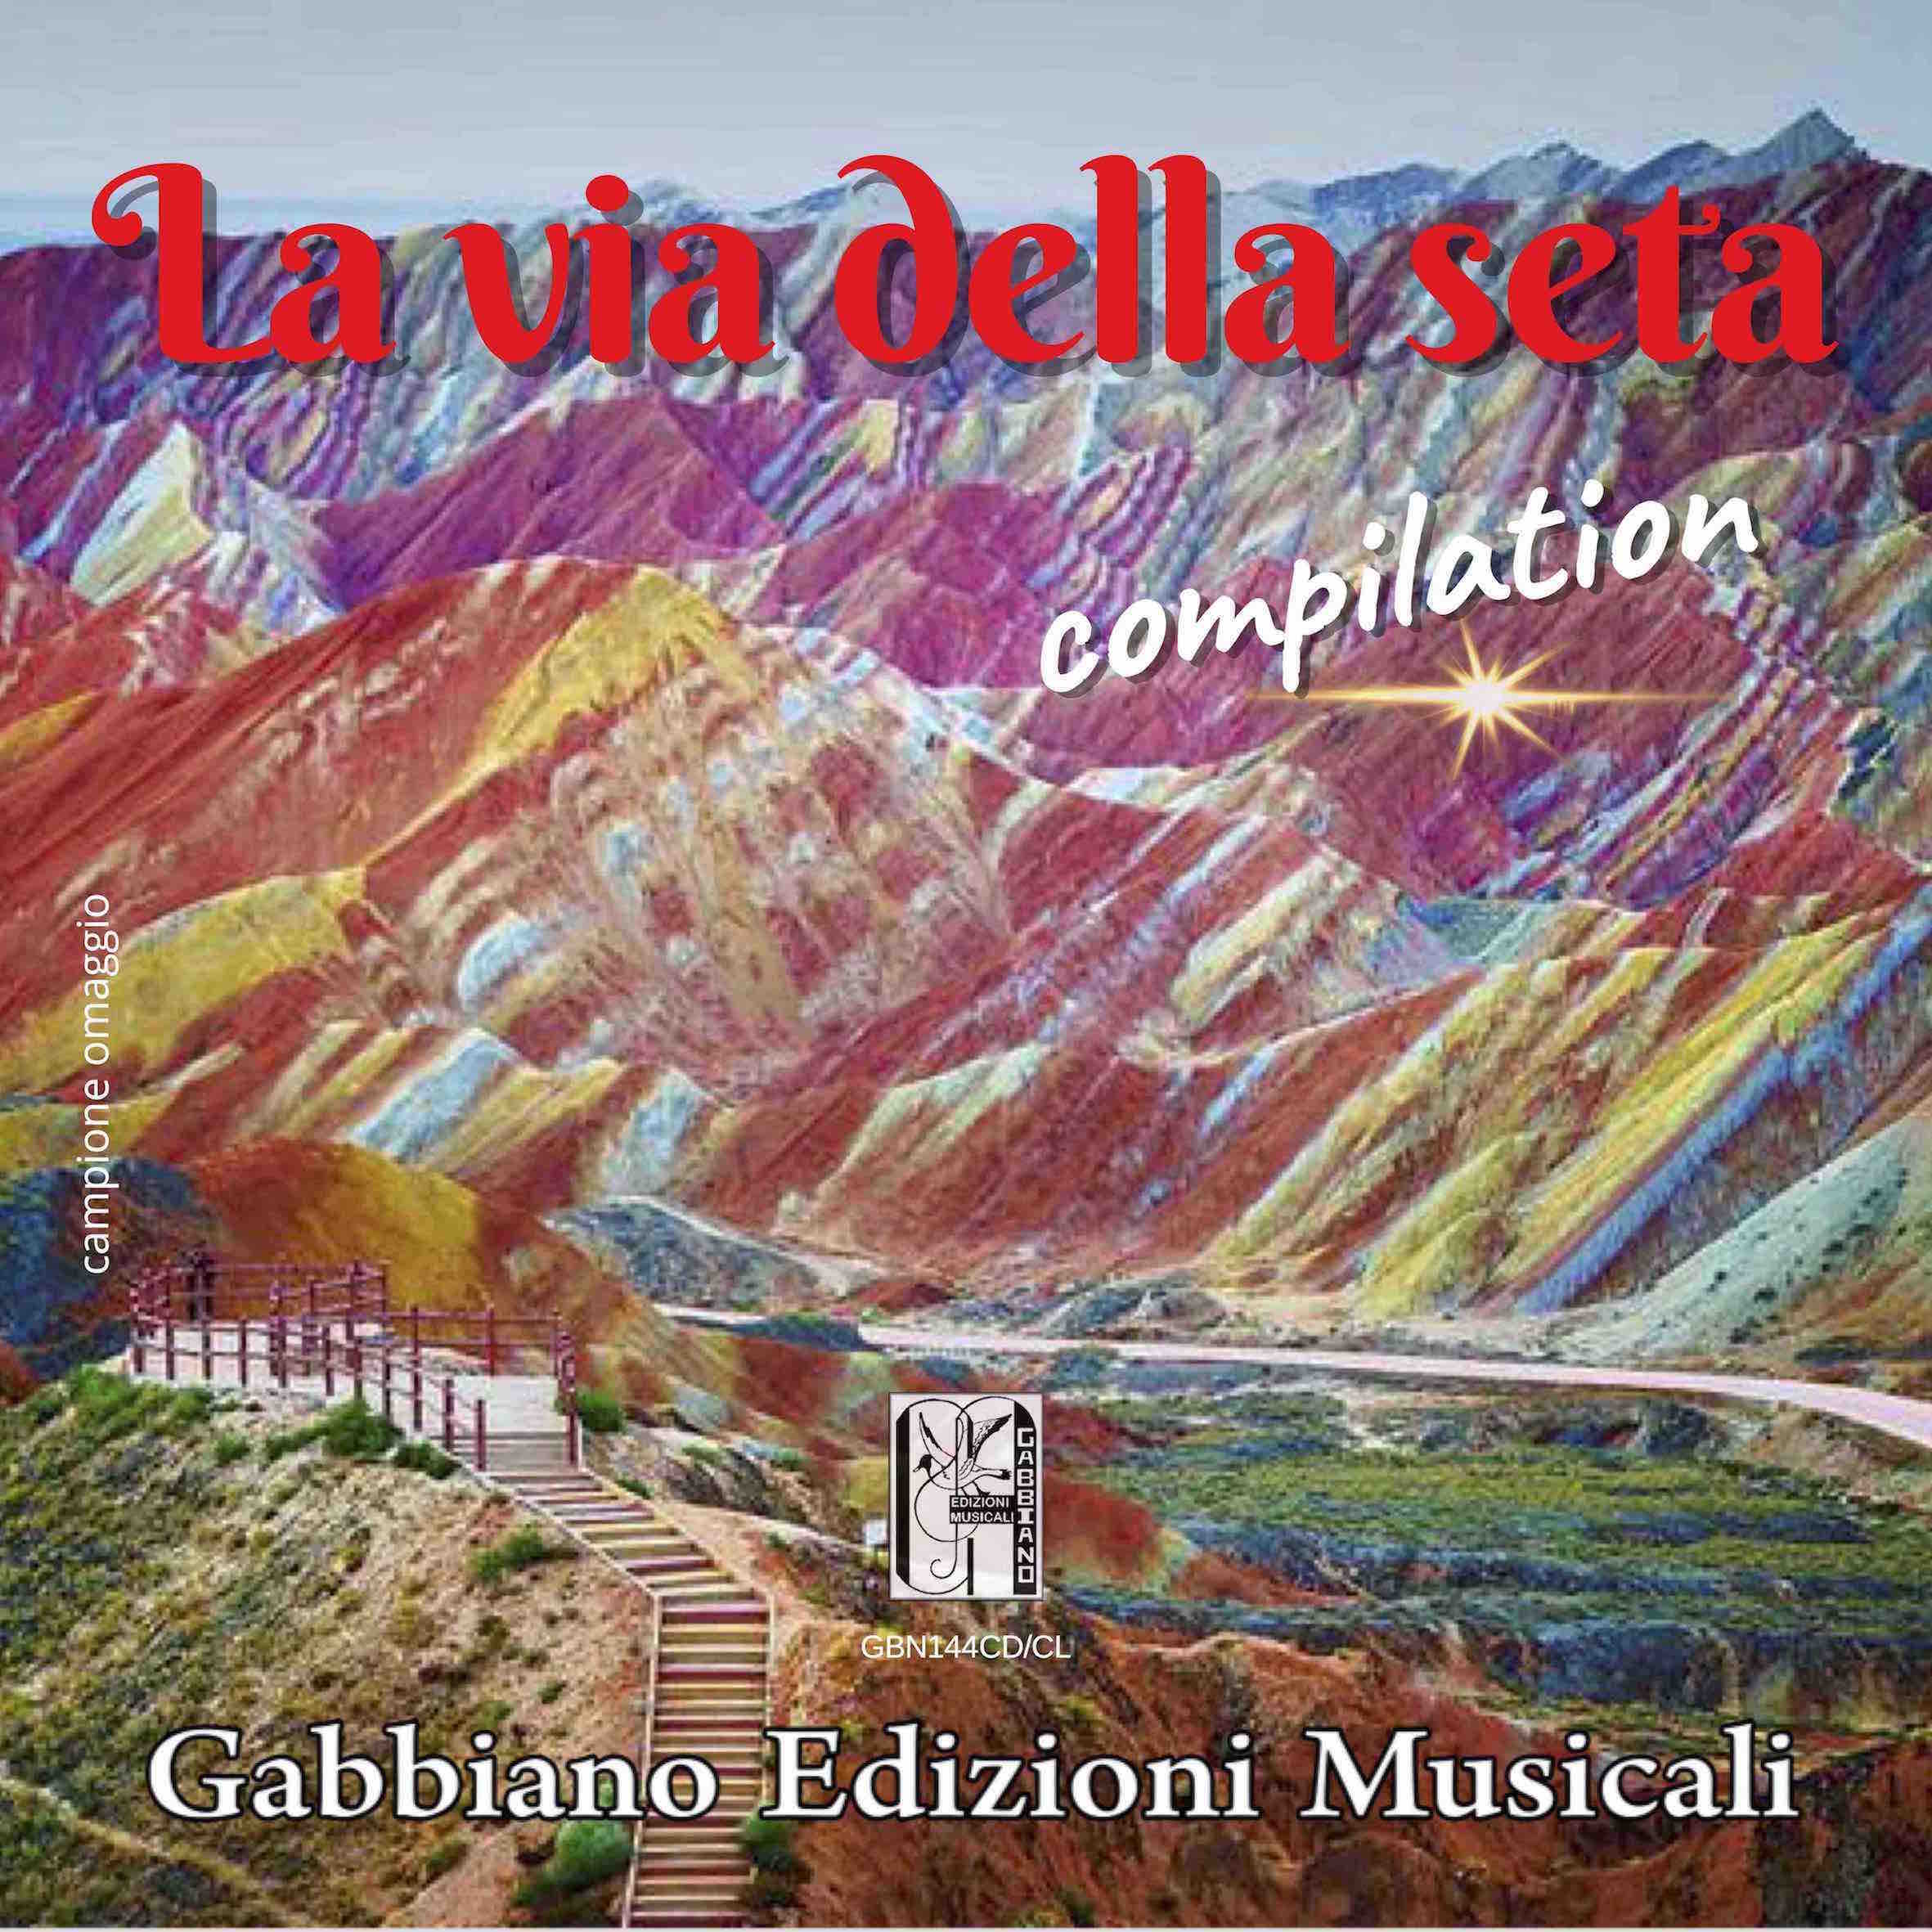 GBN144CD/CL - LA VIA DELLA SETA (compilation) - Volume 44